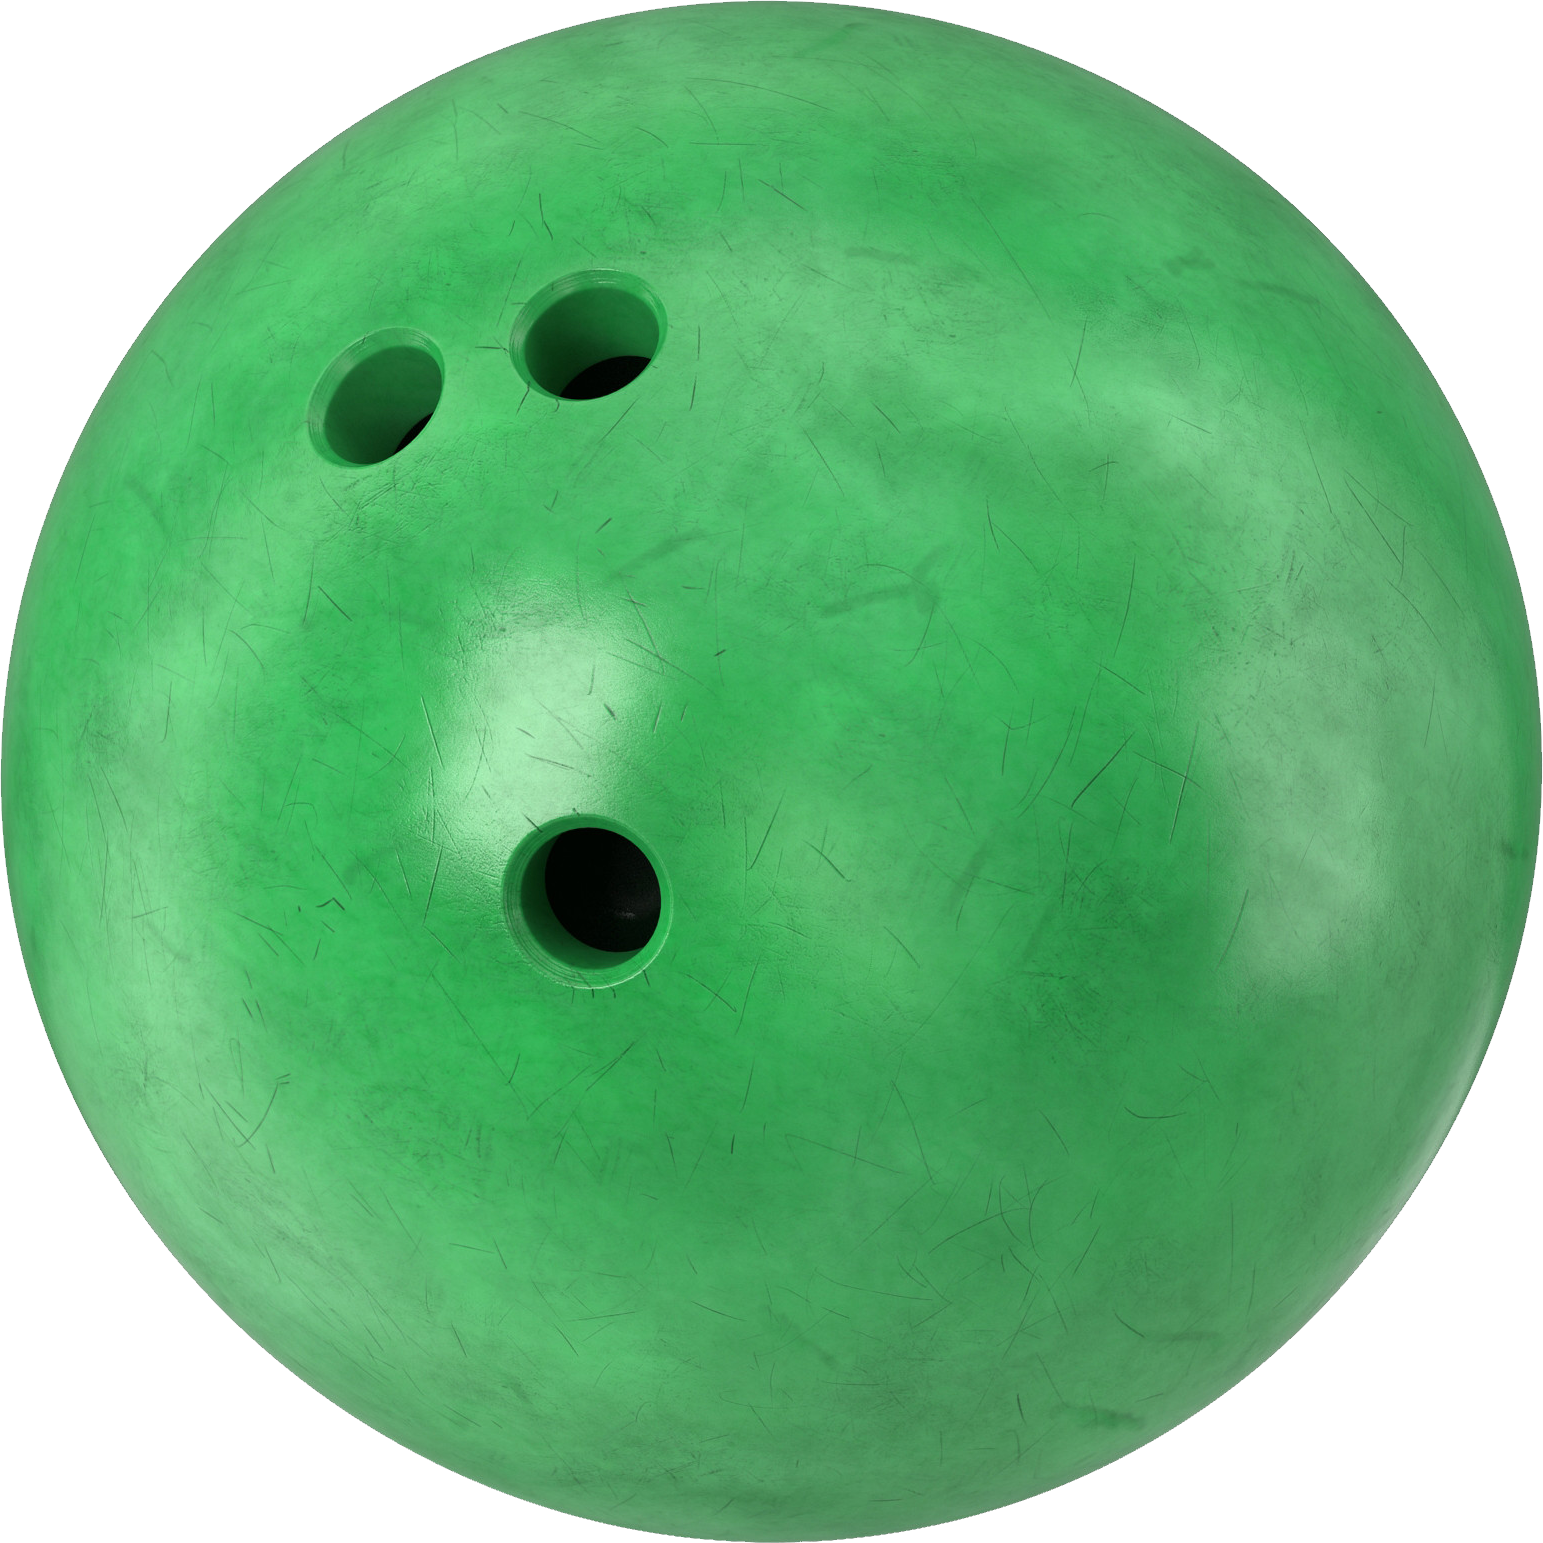 Bowling Ball Transparent Background (1543x1543)